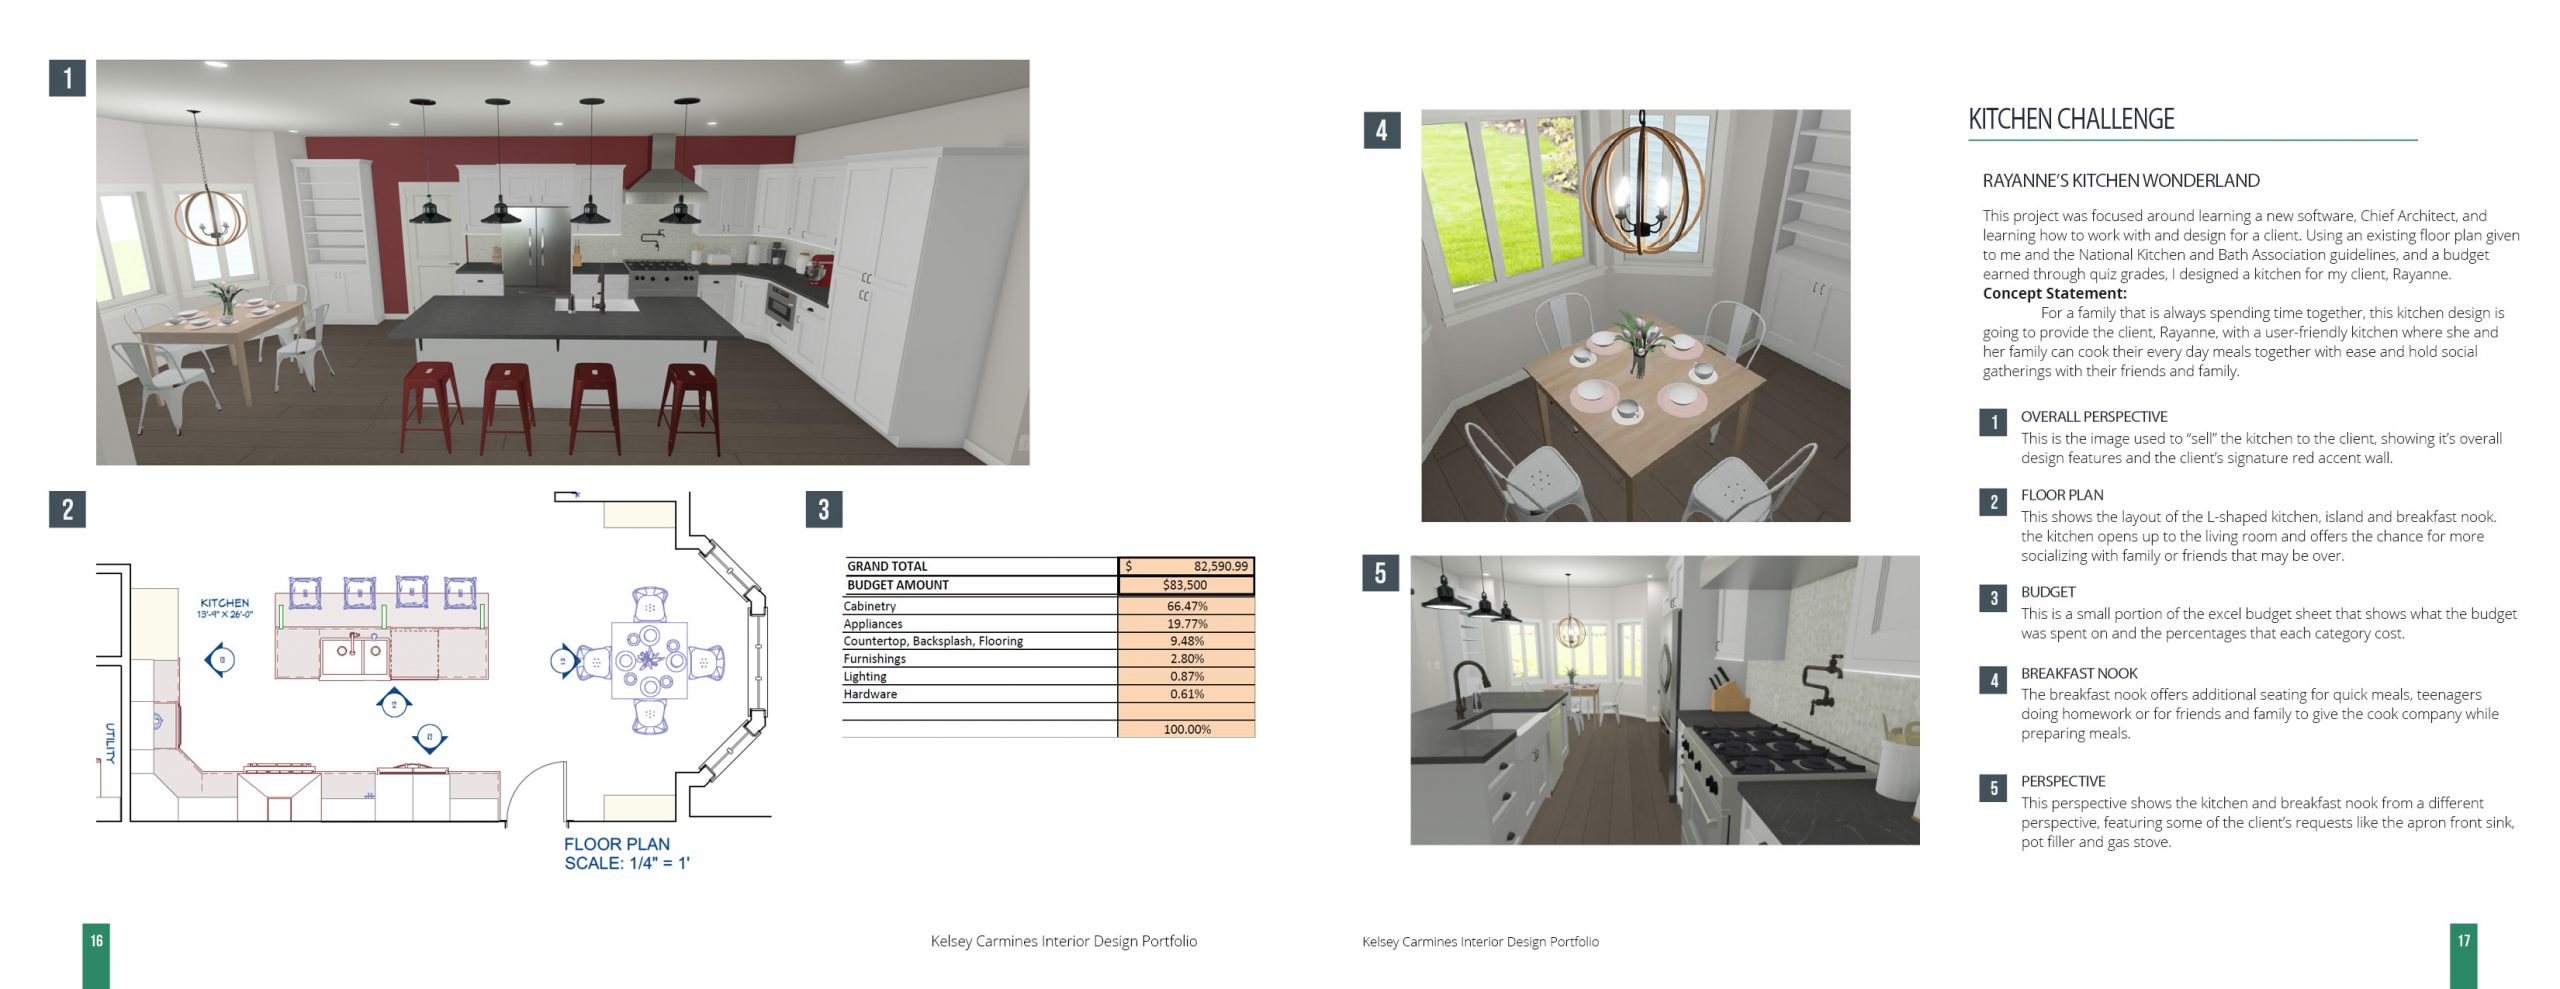 Kitchen challenge, Concept, overall perspective, floor plan, budget